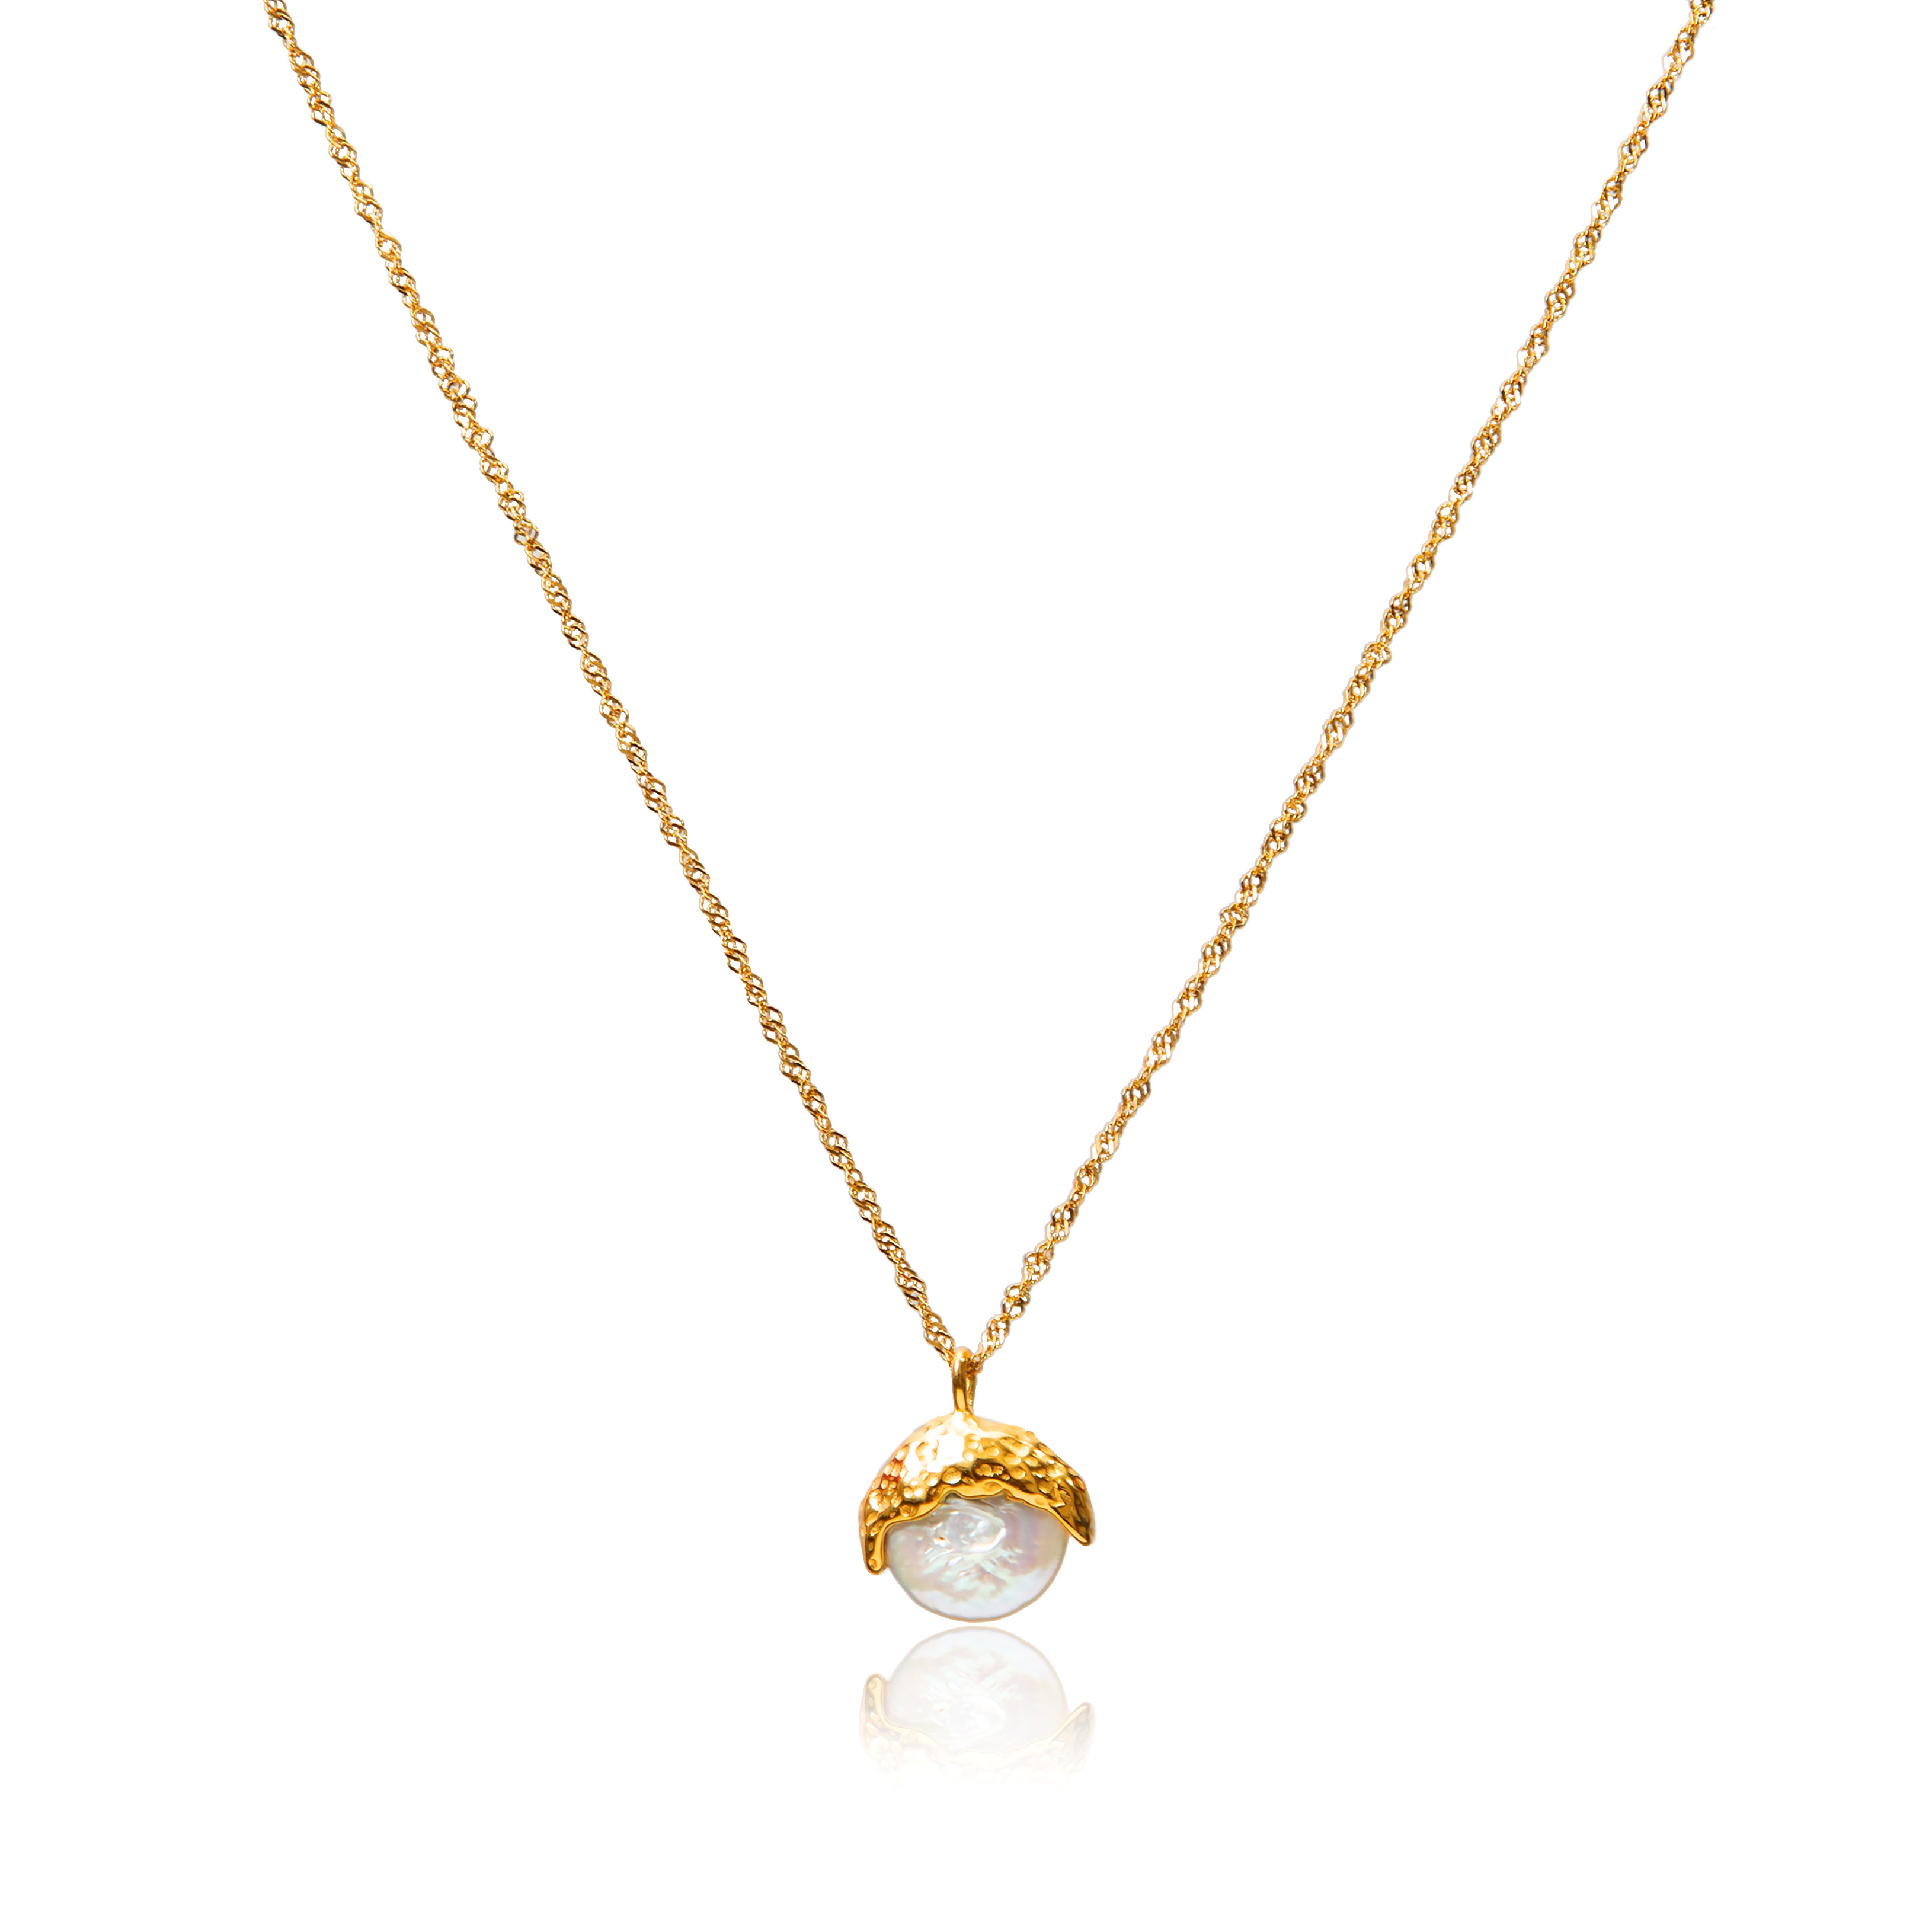 Shop Tseatjewelry Women's Gold Bay Necklace